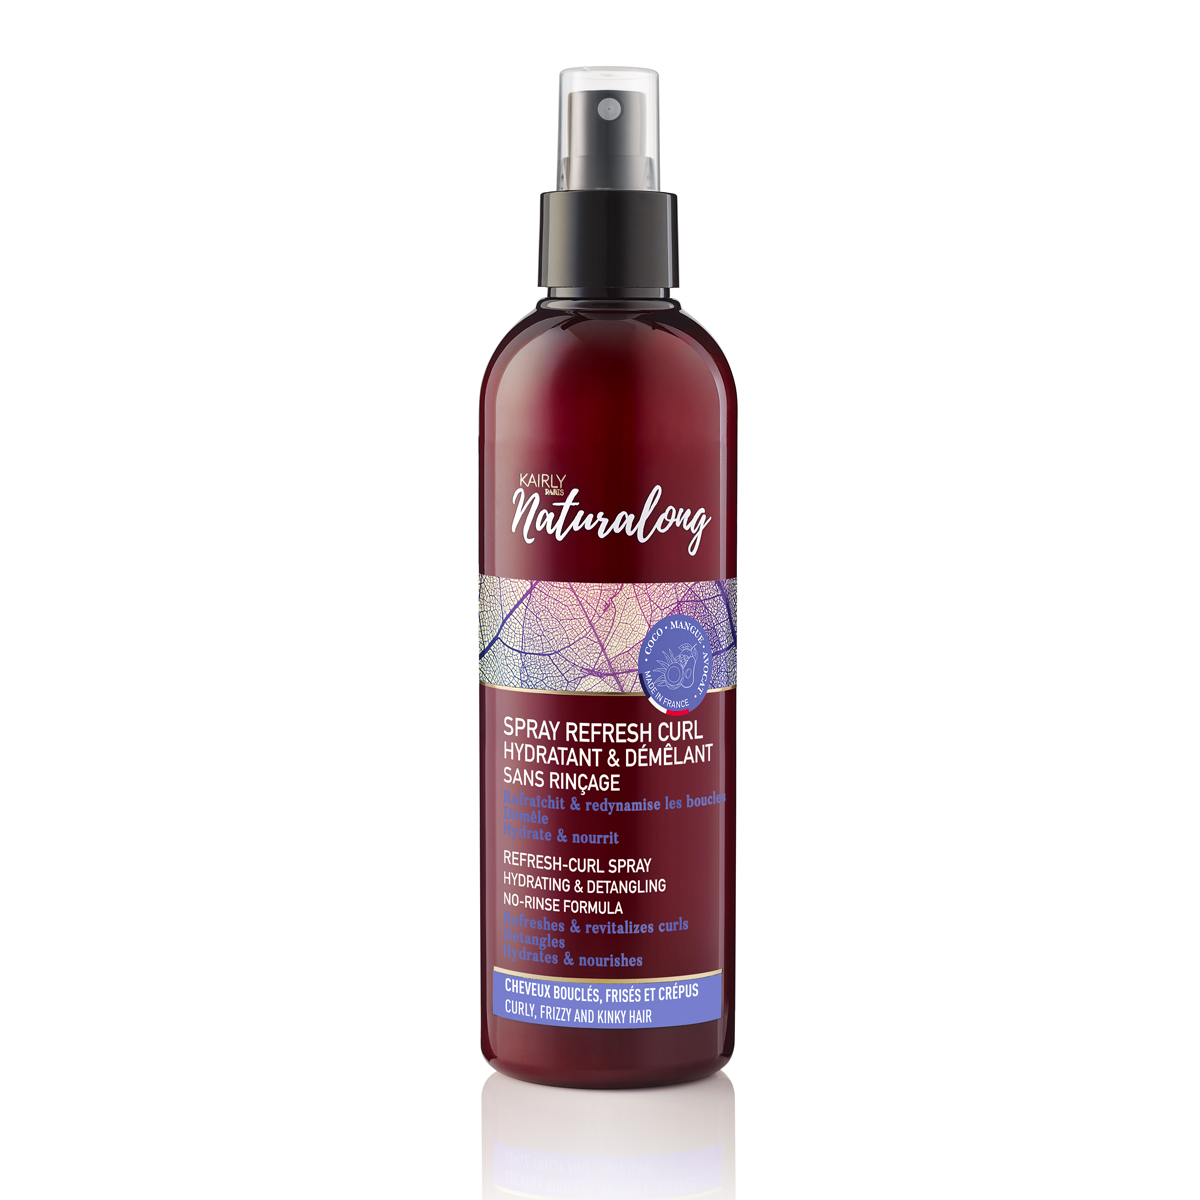 Refresh-Curl Spray – Hydrating and Detangling, no rinsing | NATURALON